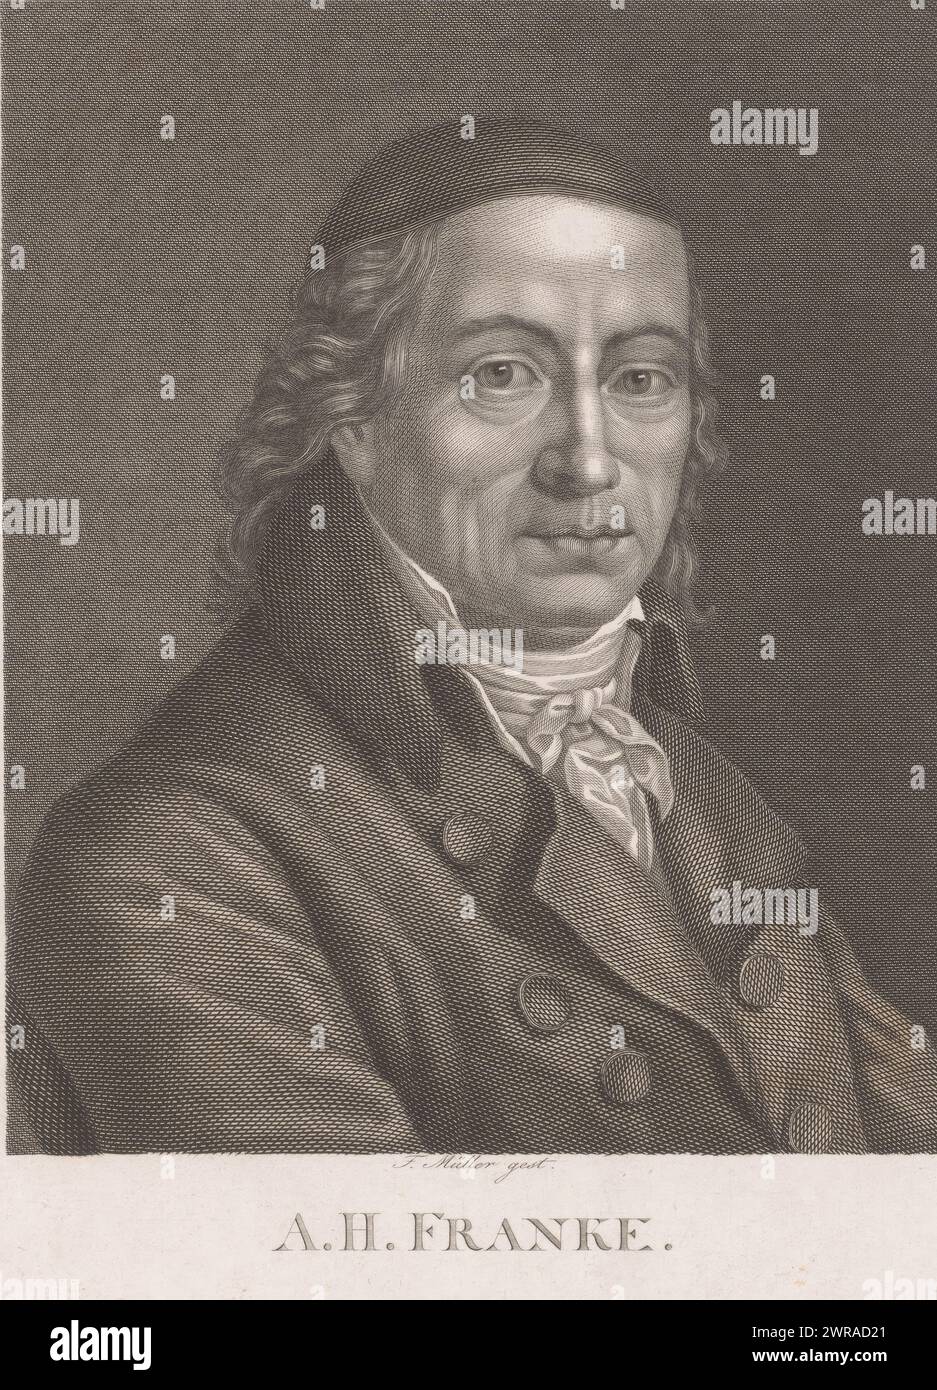 Portrait of A.H. Franke, print maker: Johann Friedrich Wilhelm Müller, 1792 - 1816, paper, engraving, height 249 mm × width 195 mm, print Stock Photo